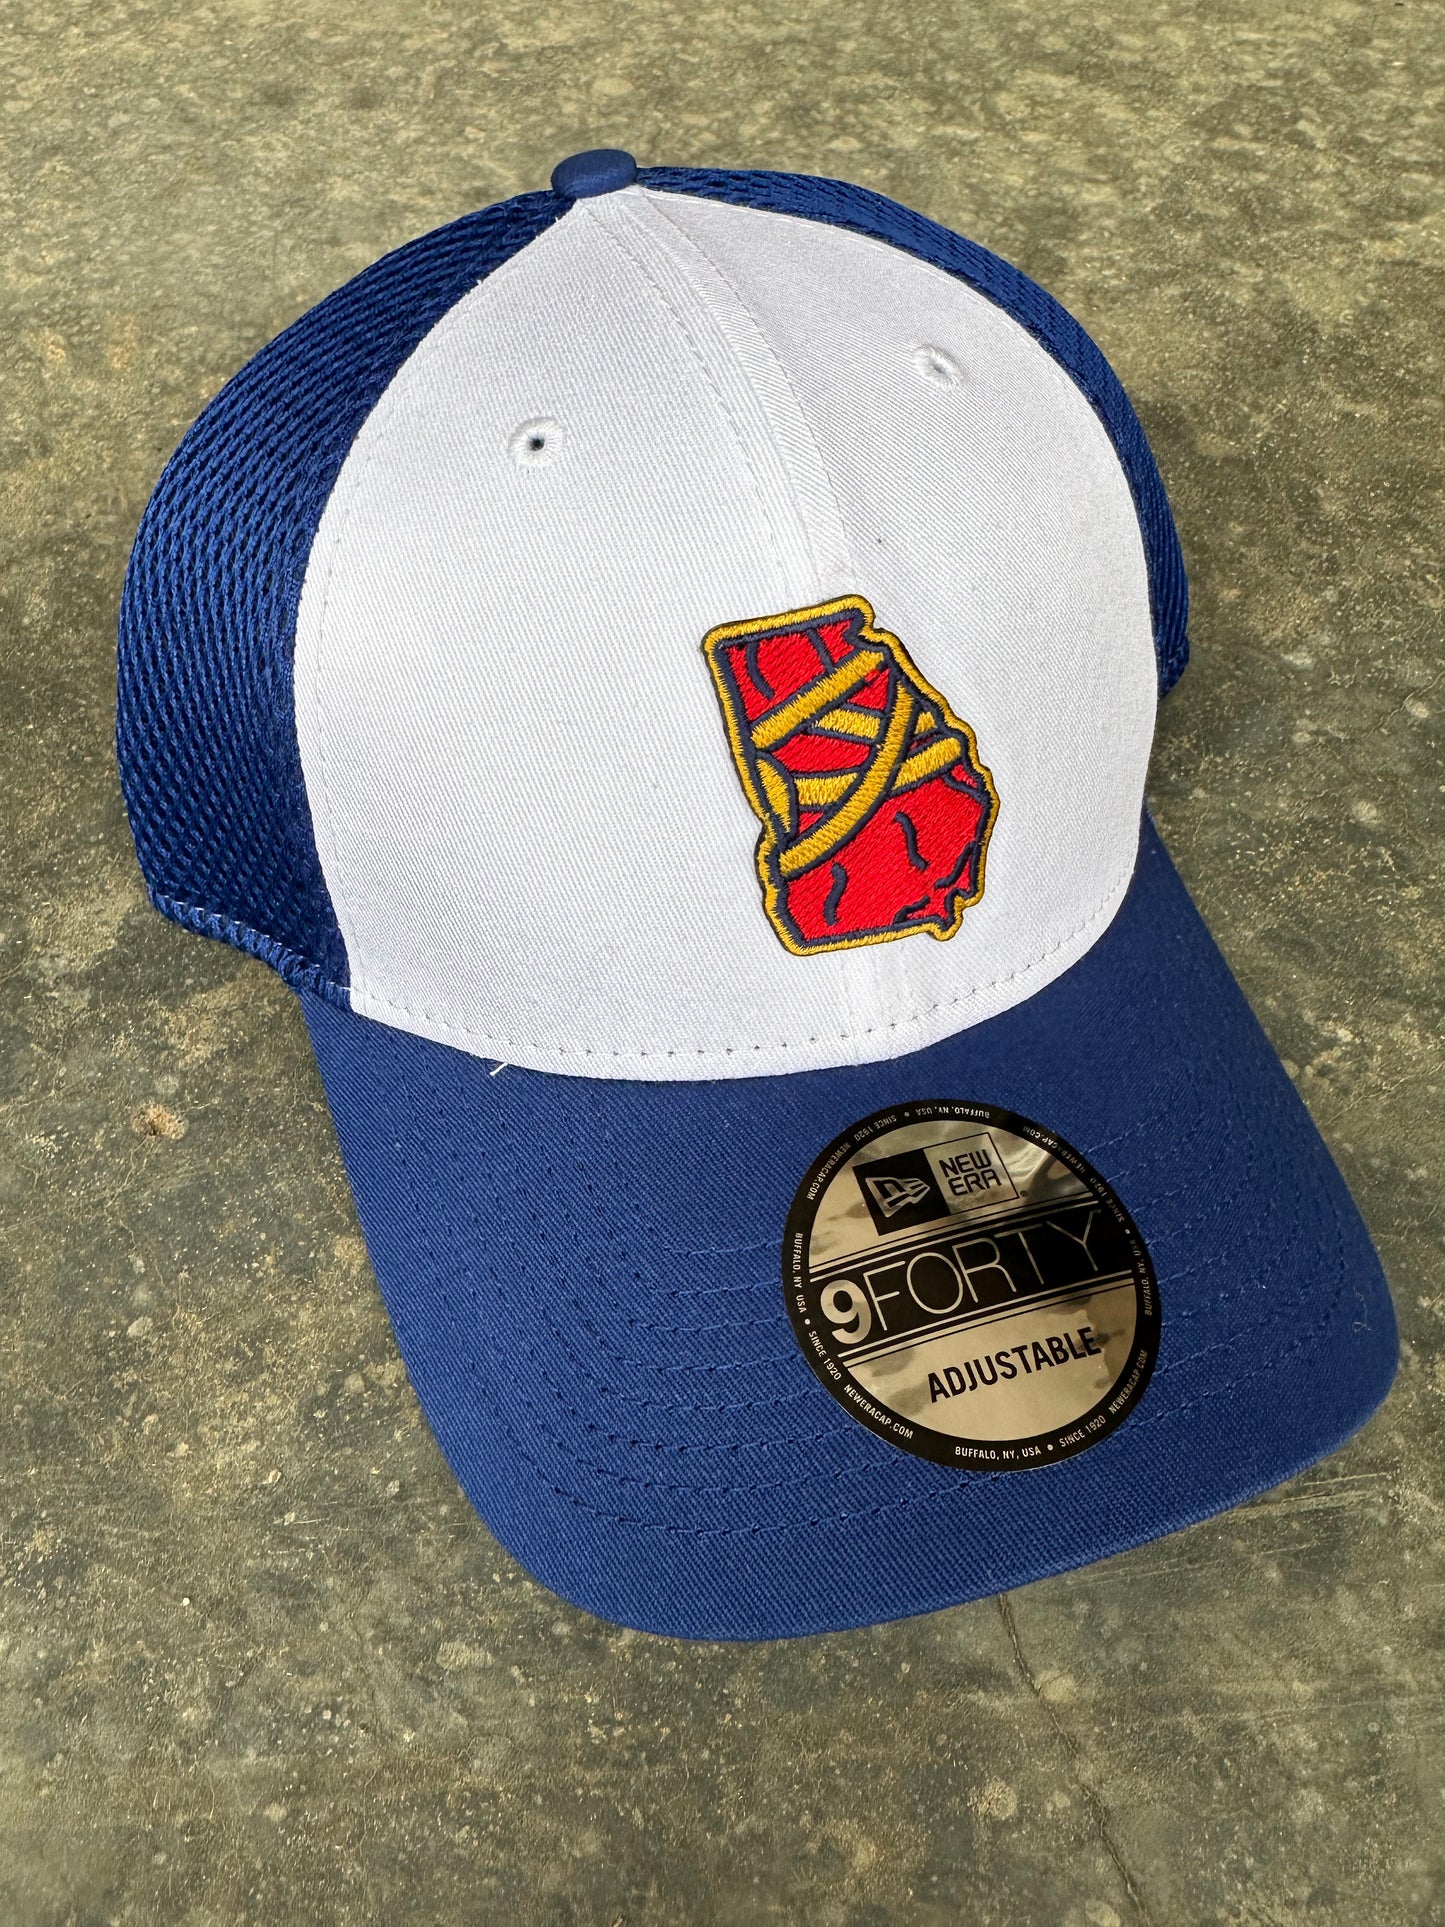 GA Tomahawk Hat – Atlanta Bobbles